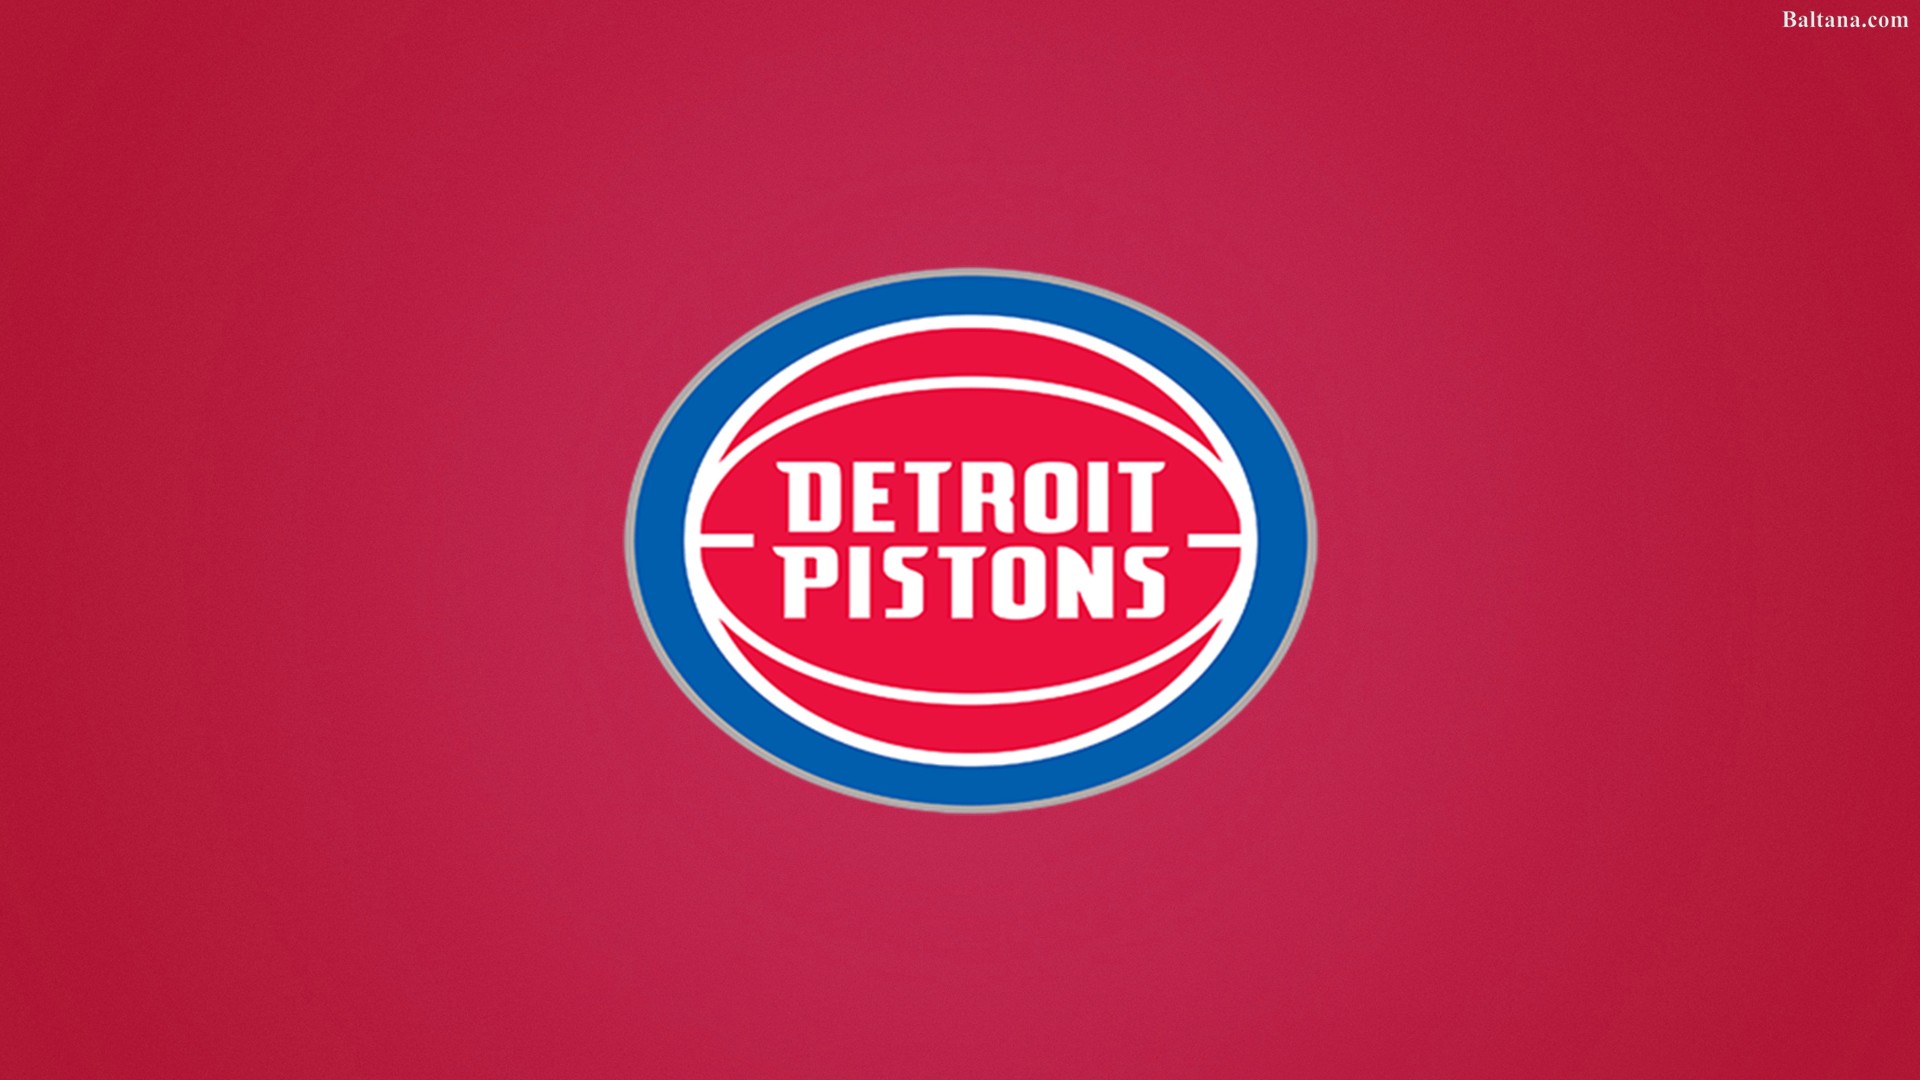 Detroit Pistons Best Wallpaper Baltana